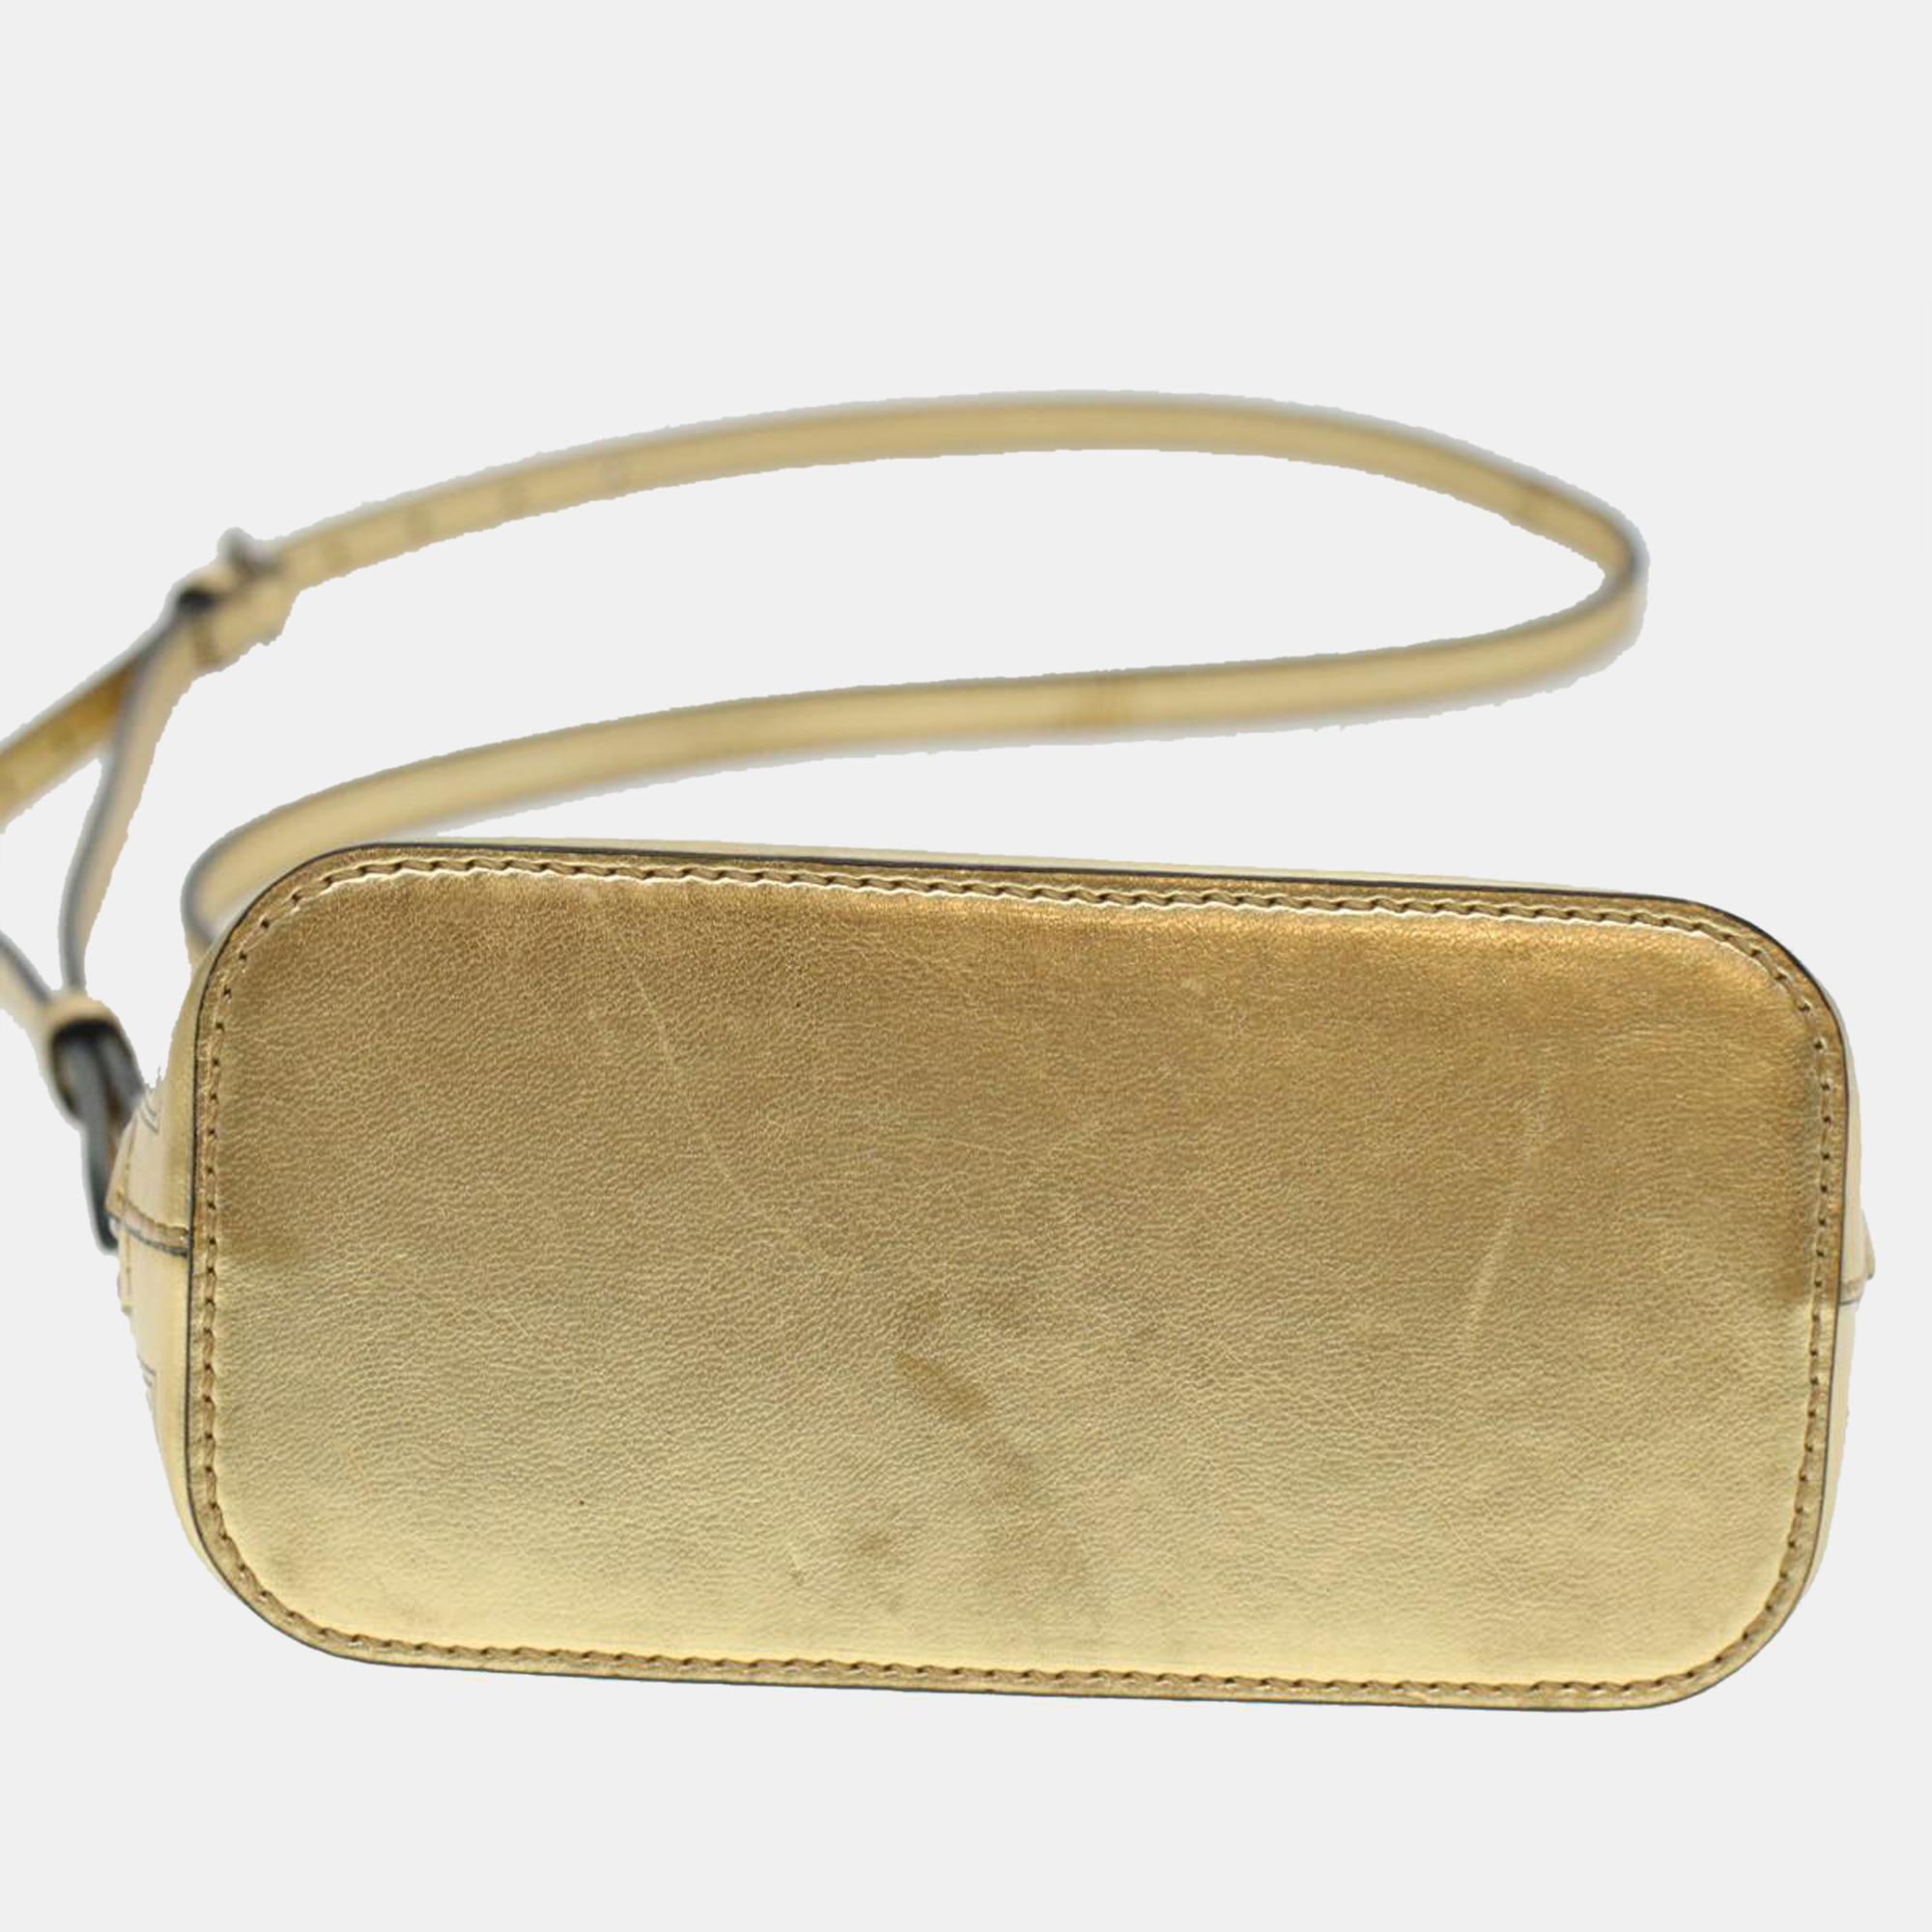 Gucci Gold Leather Guccy Shoulder Bag